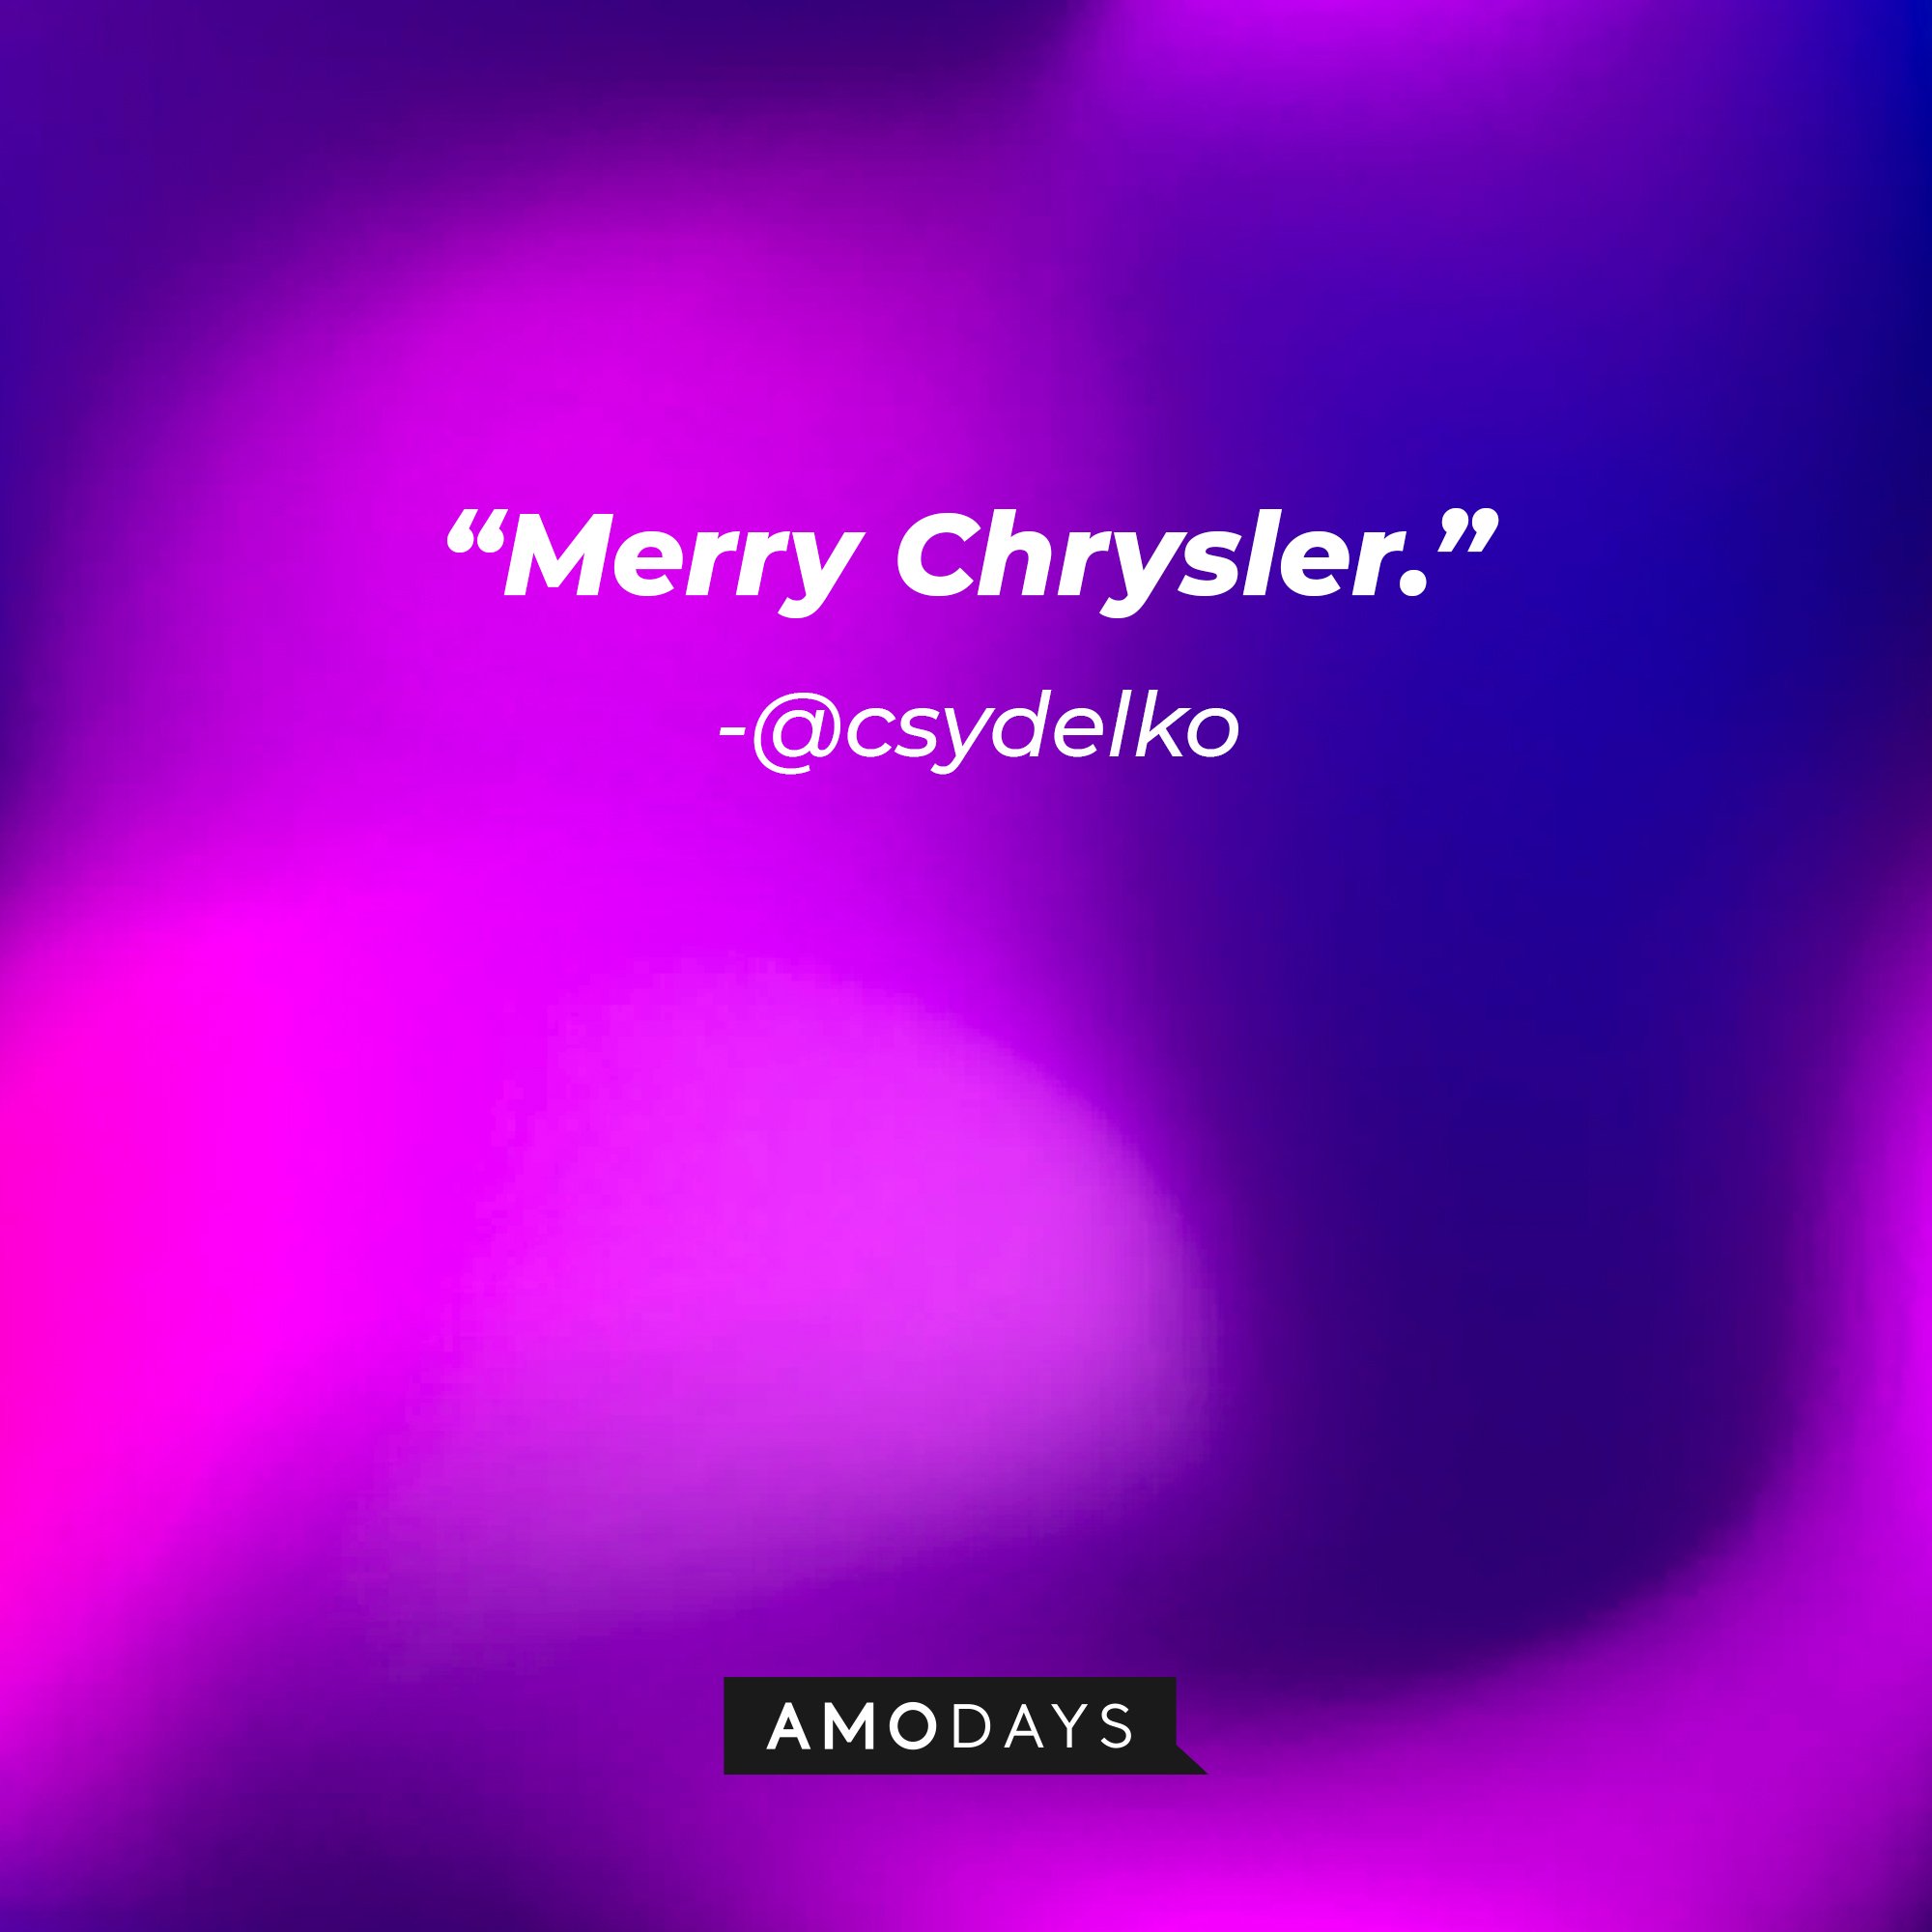 @csydelko's quote: “Merry Chrysler.” | Image: AmoDays